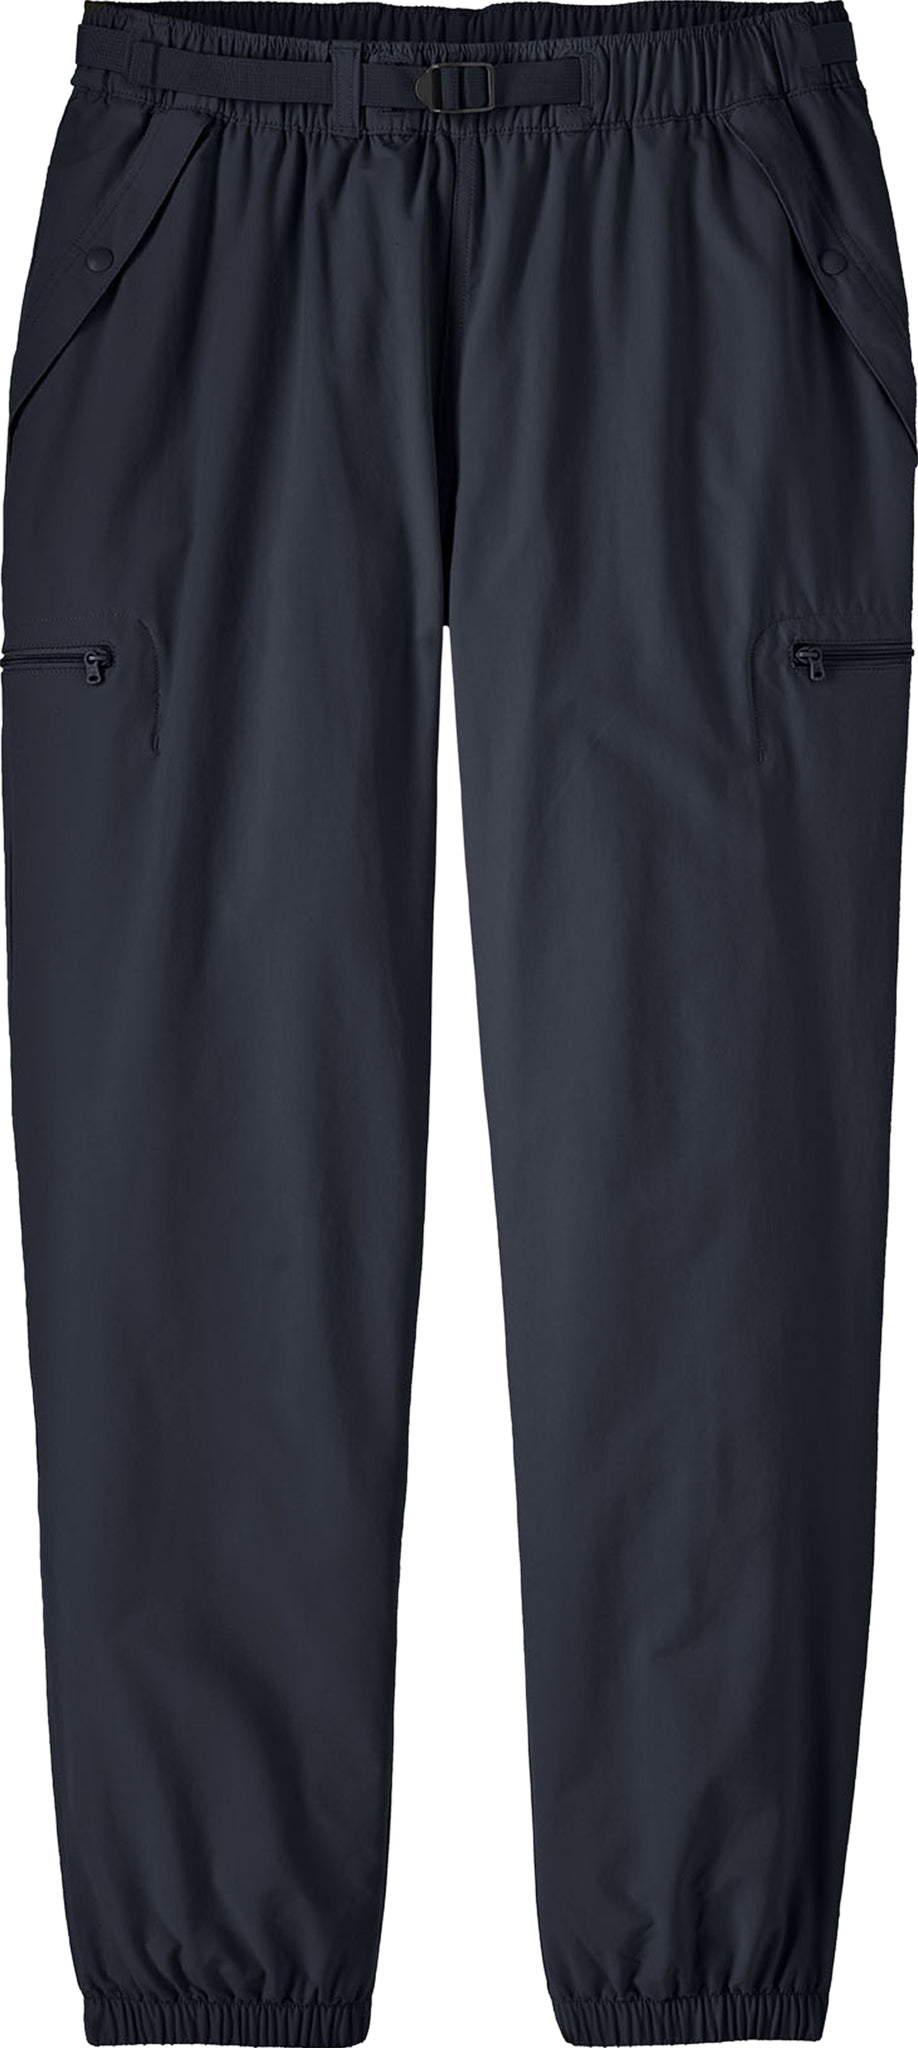 VENTURE E-WAIST LINED HYBRID PANTS  Hybrid pants, Lightweight pants,  Hybrid clothing